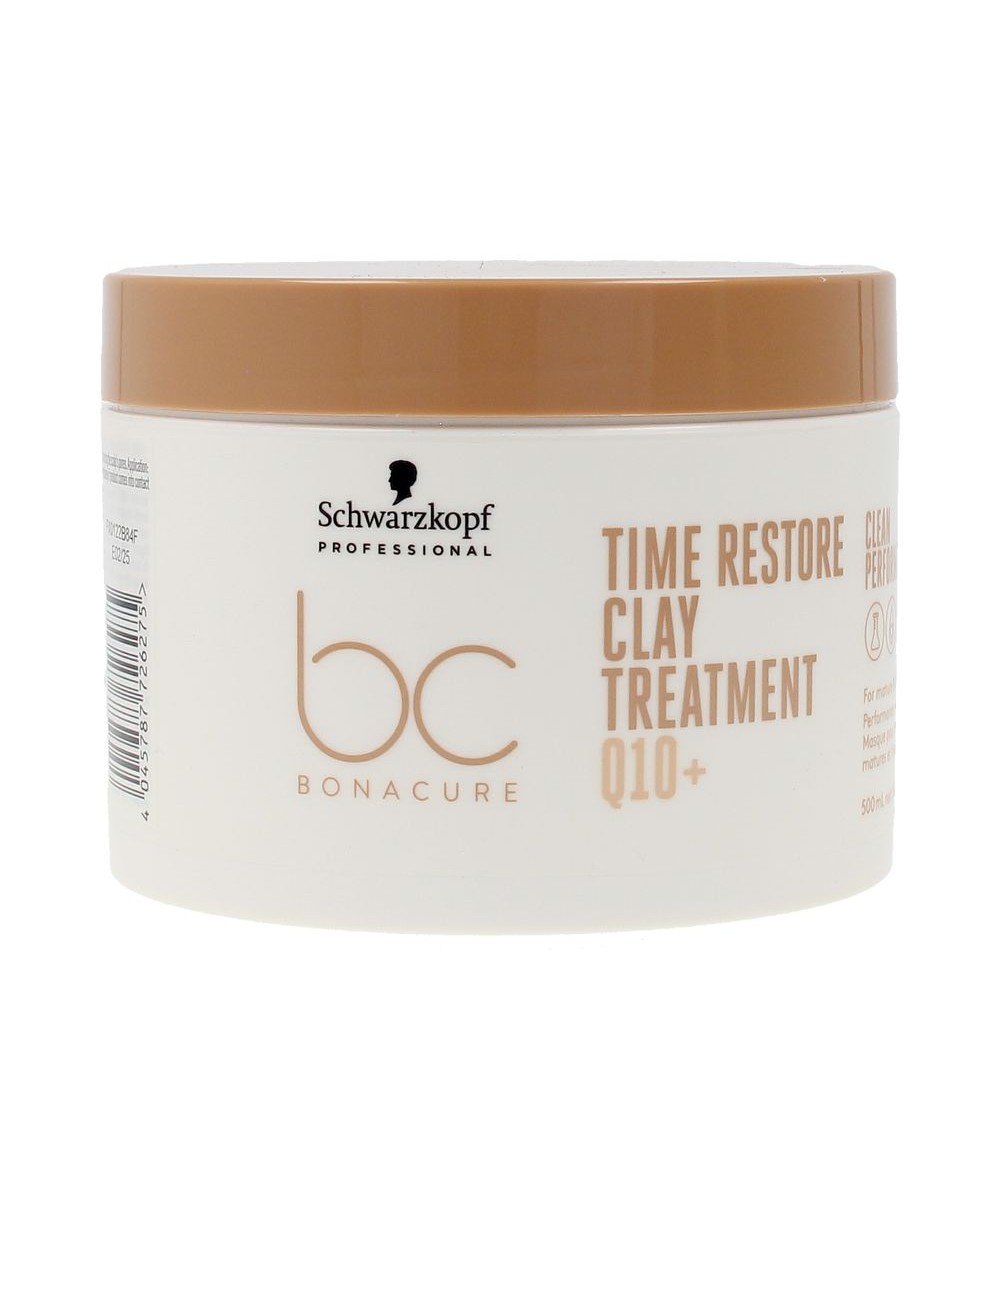 BC TIME RESTORE Q10+ clay treatment